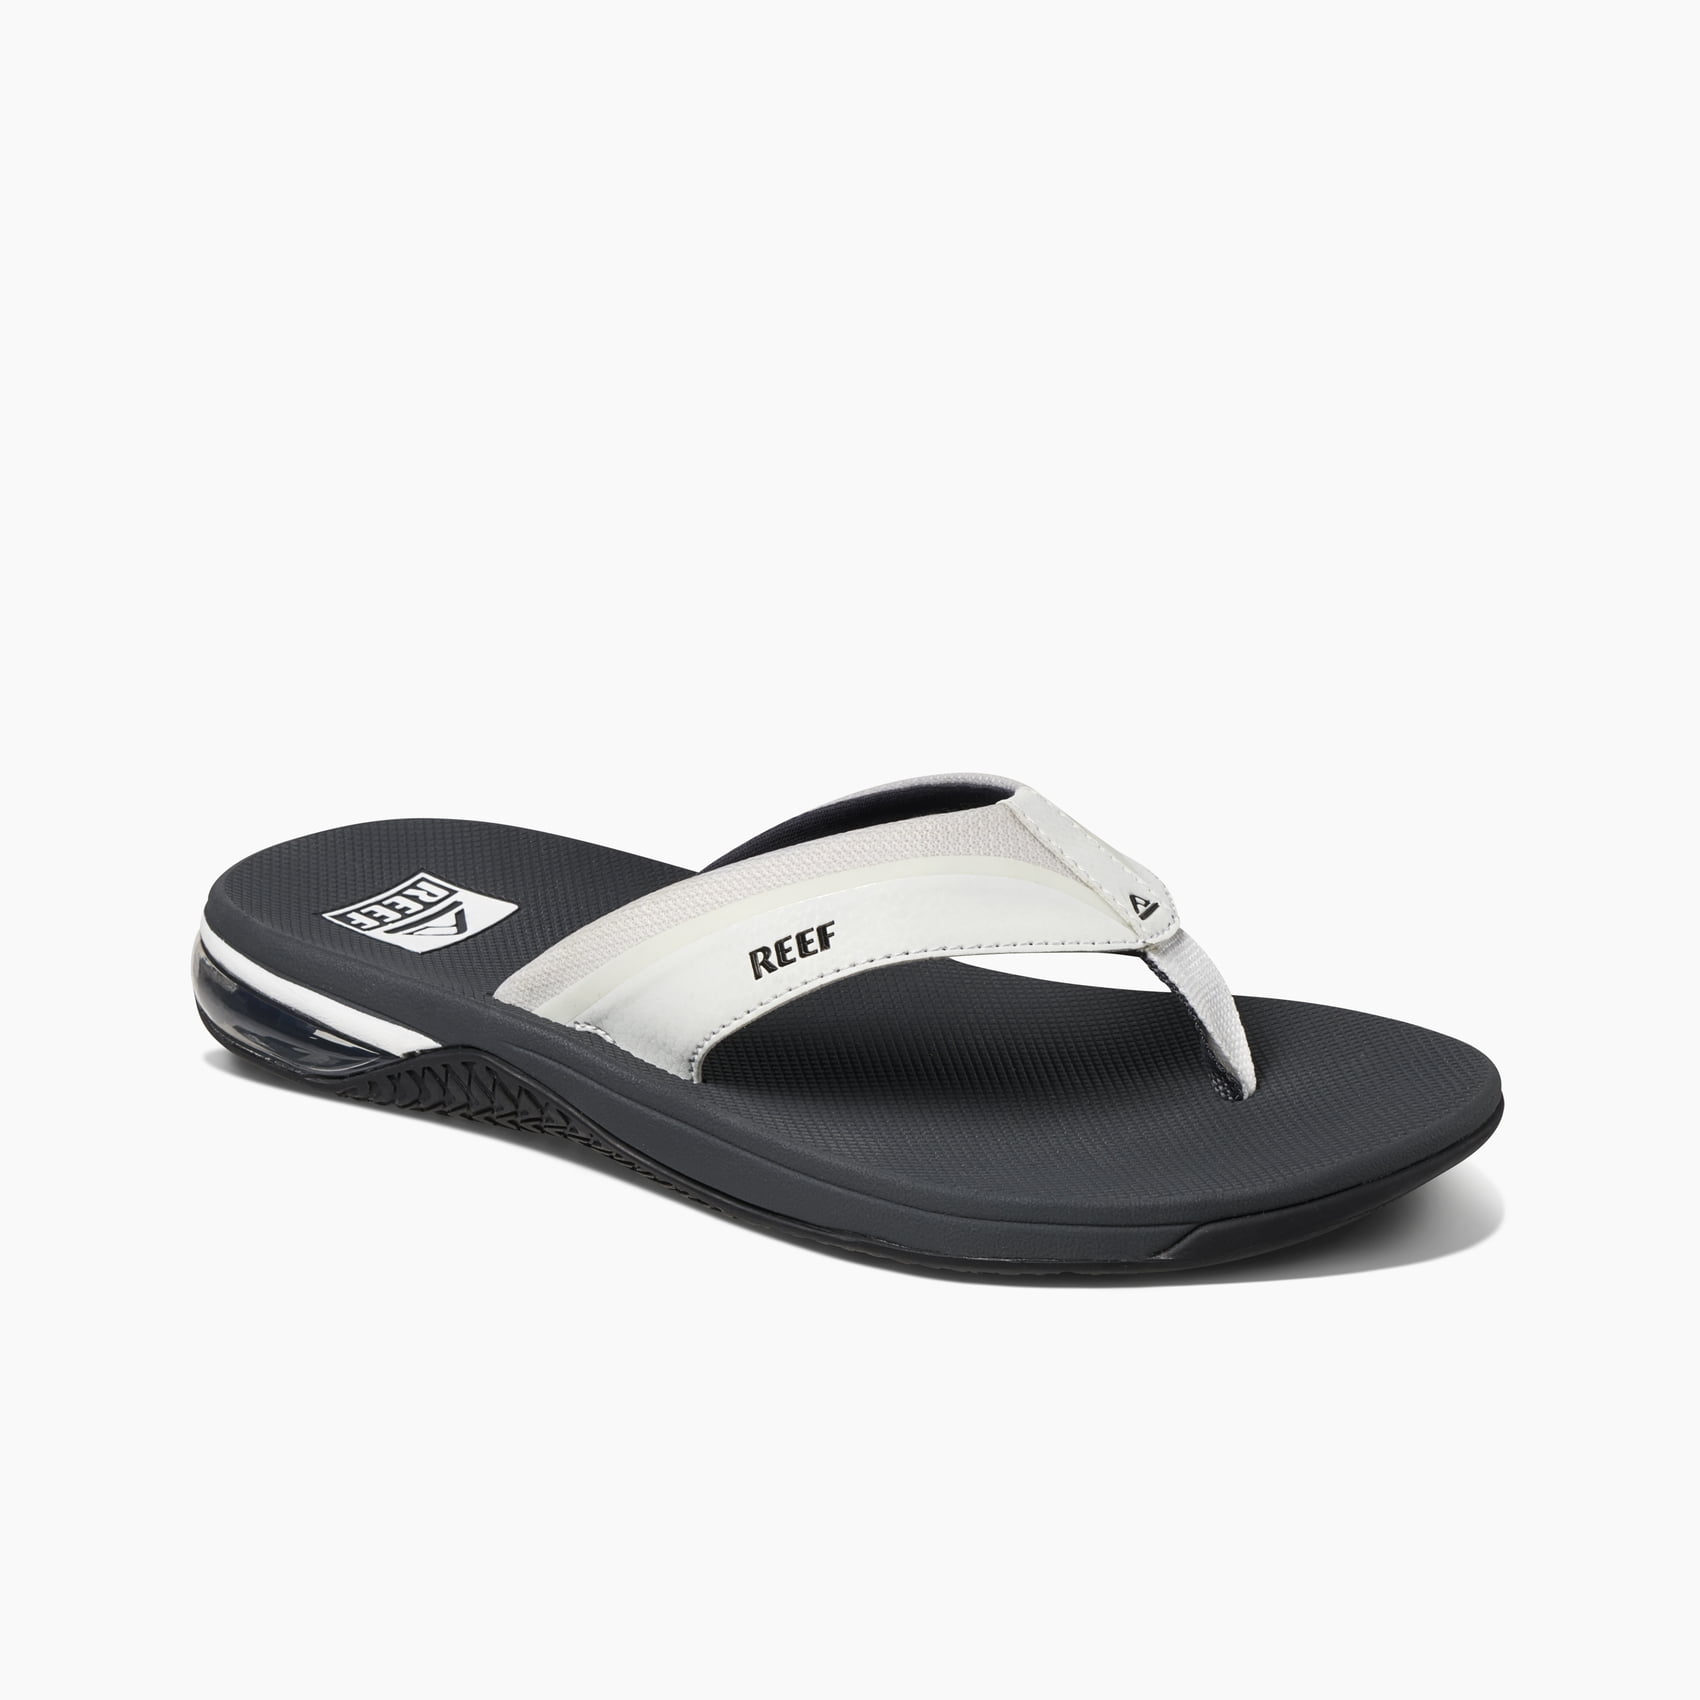 Men's Sandals, Anchor, Grey/White, 13 - Walmart.com